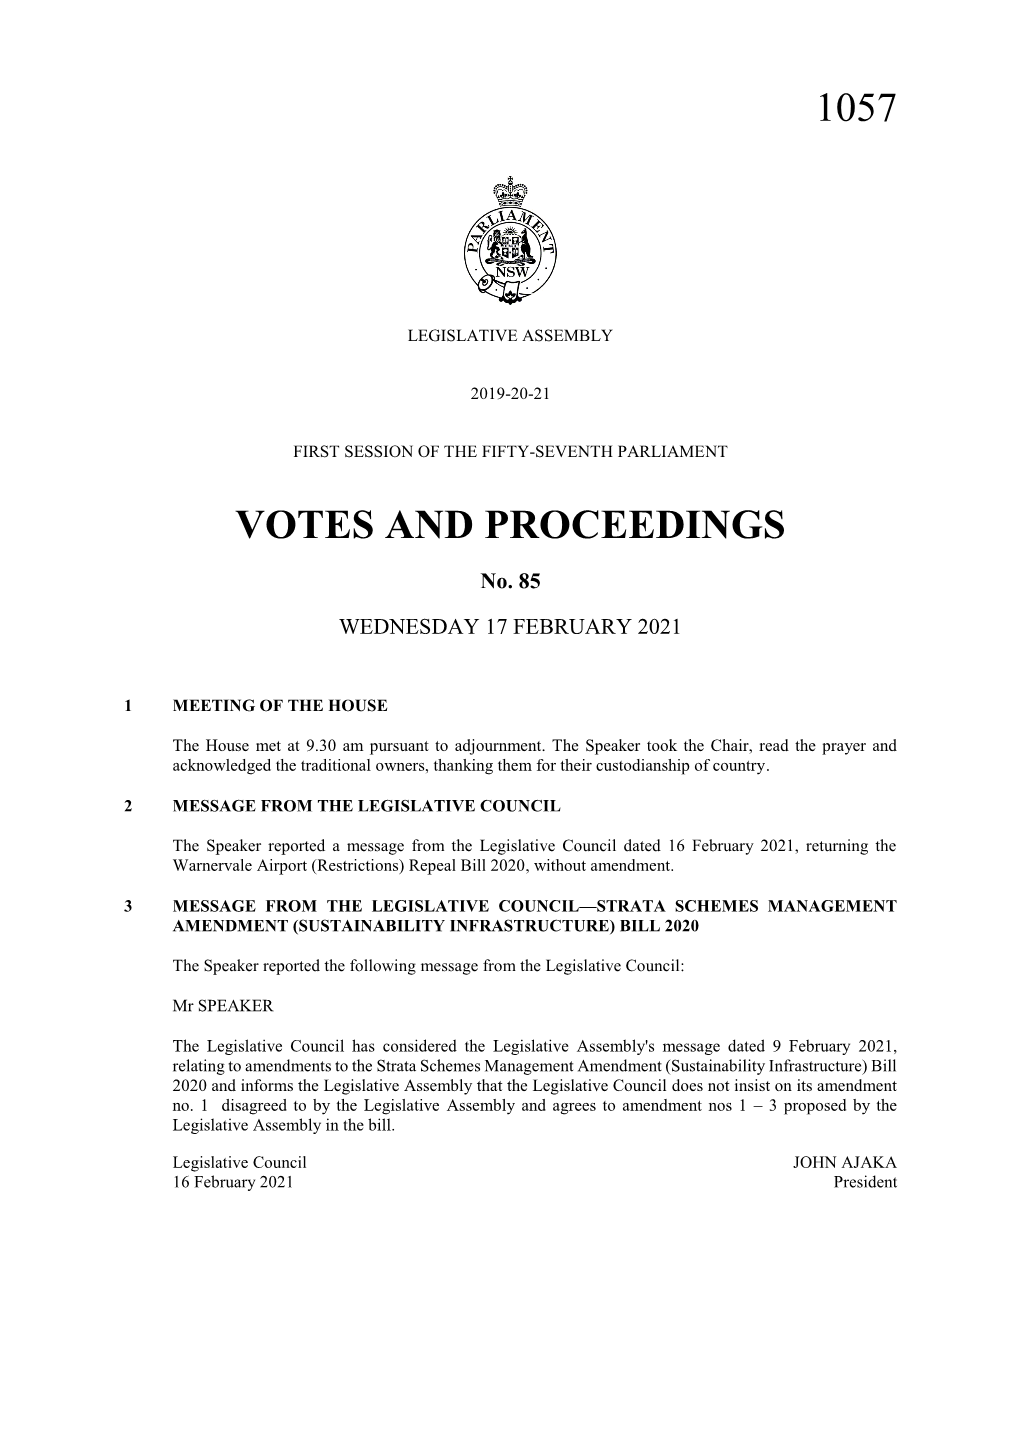 1057 Votes and Proceedings